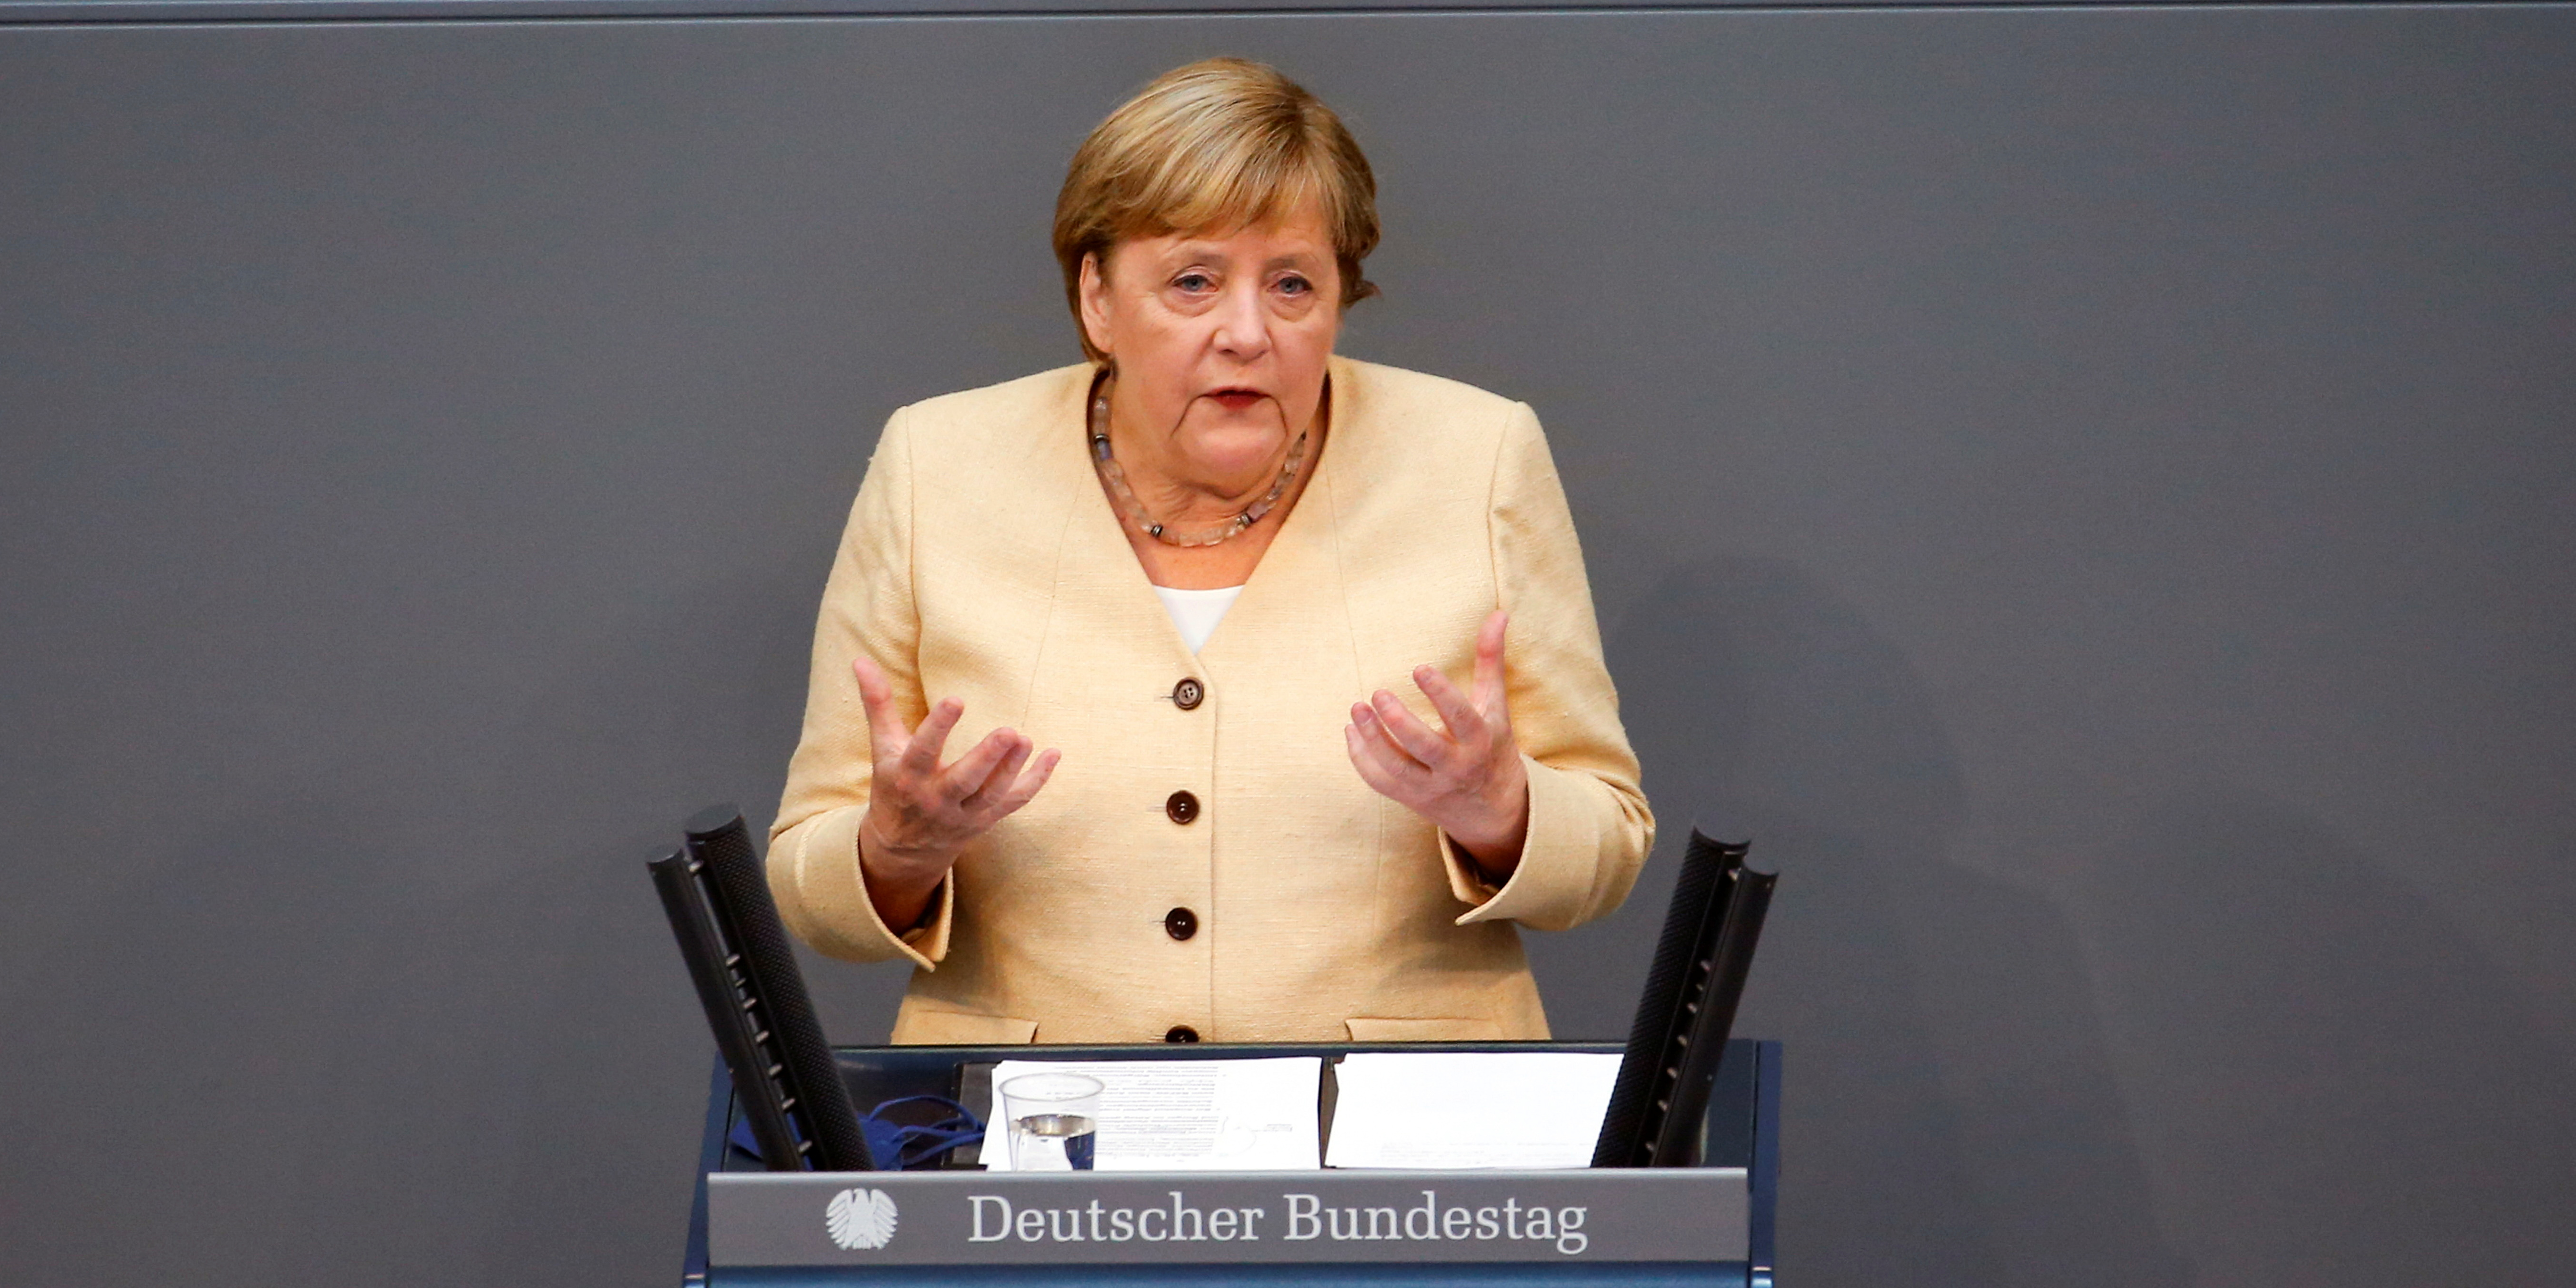 Les cinq questions clés des élections fédérales allemandes